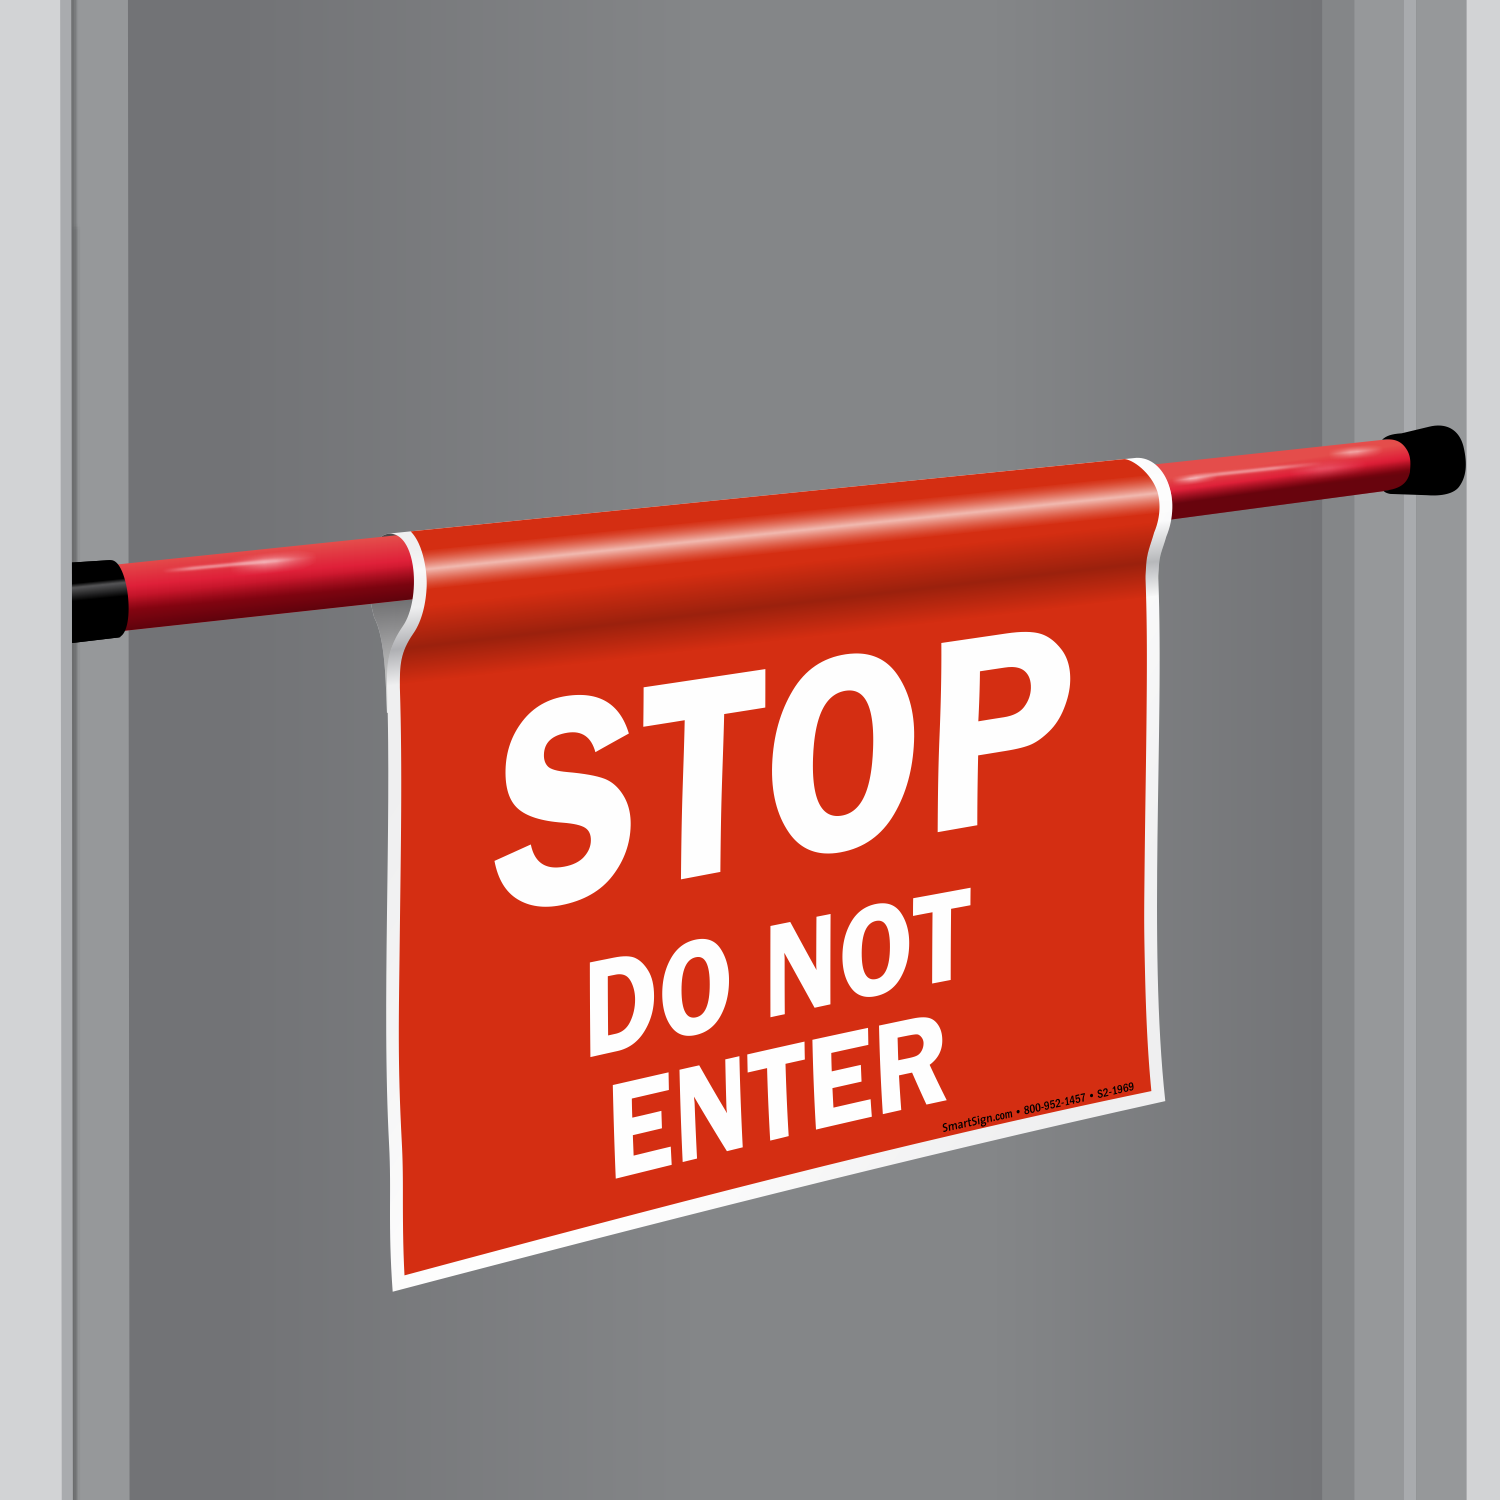 DoorBoss Signs: Portable, Lightweight Safety Barriers